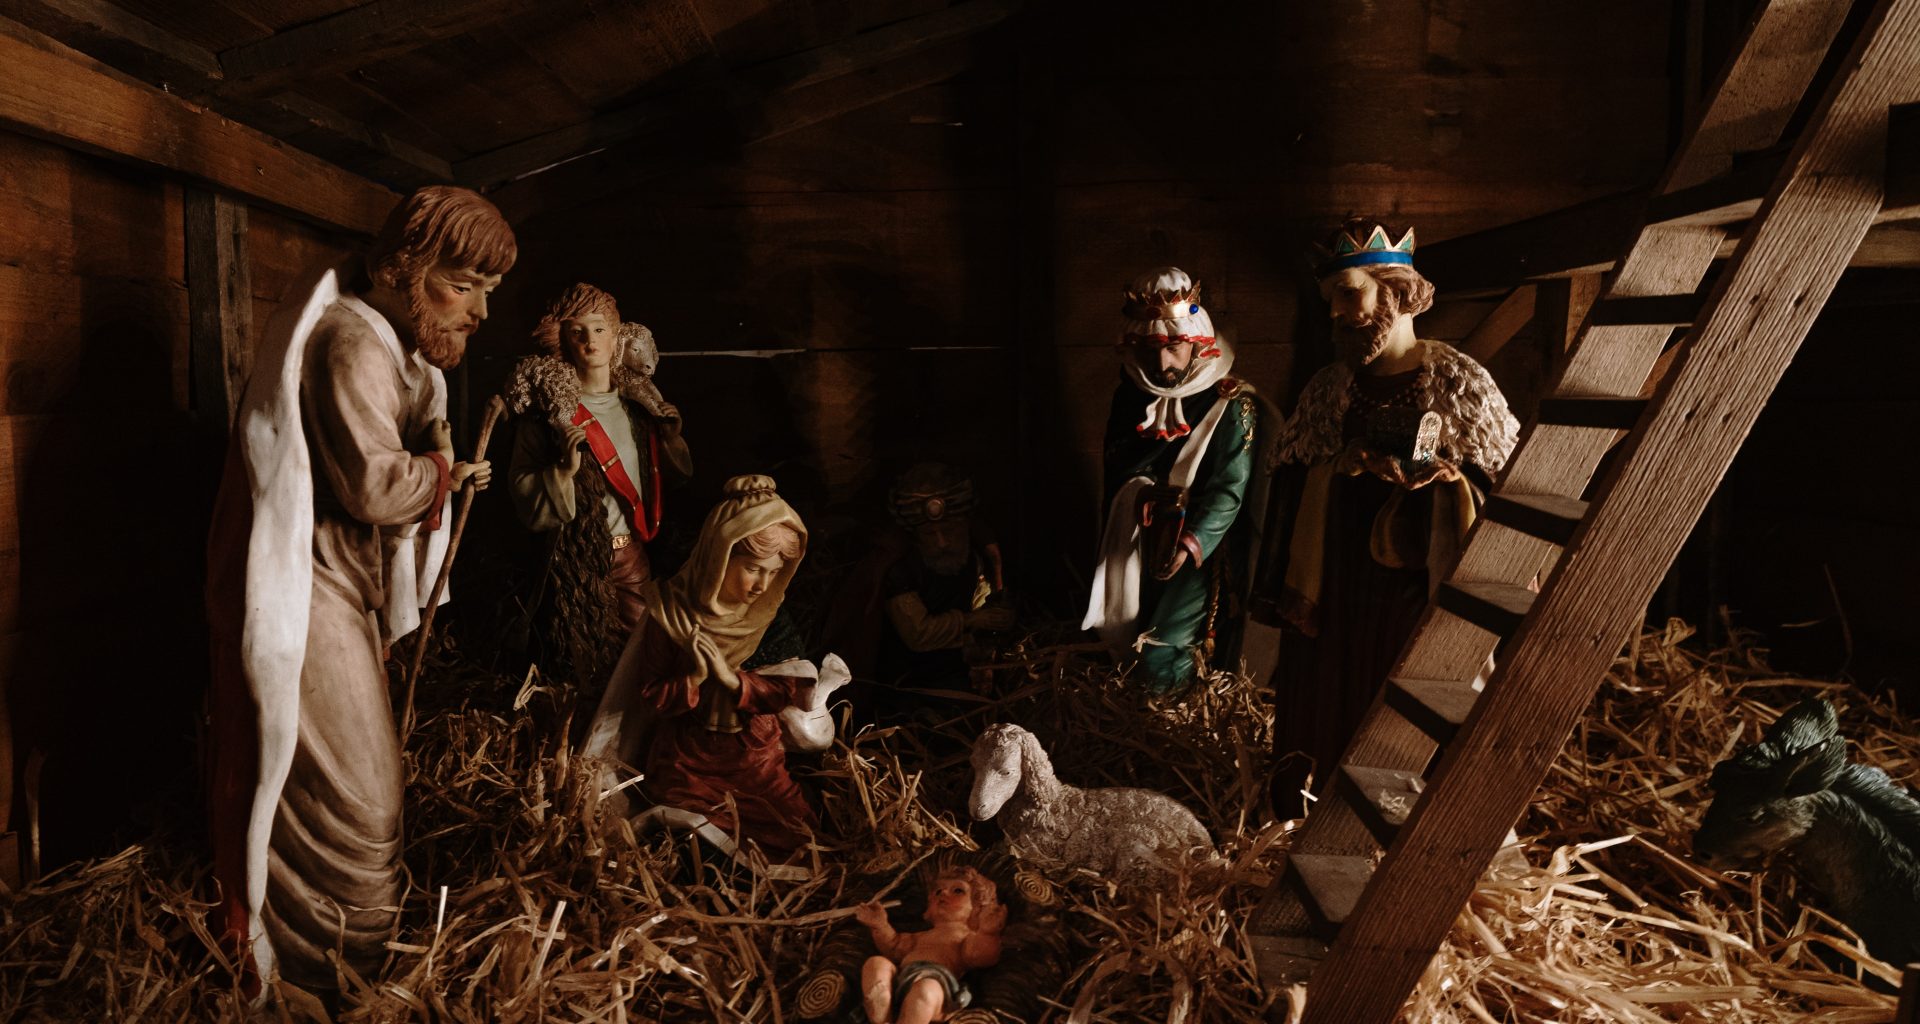 The Nativity figurines